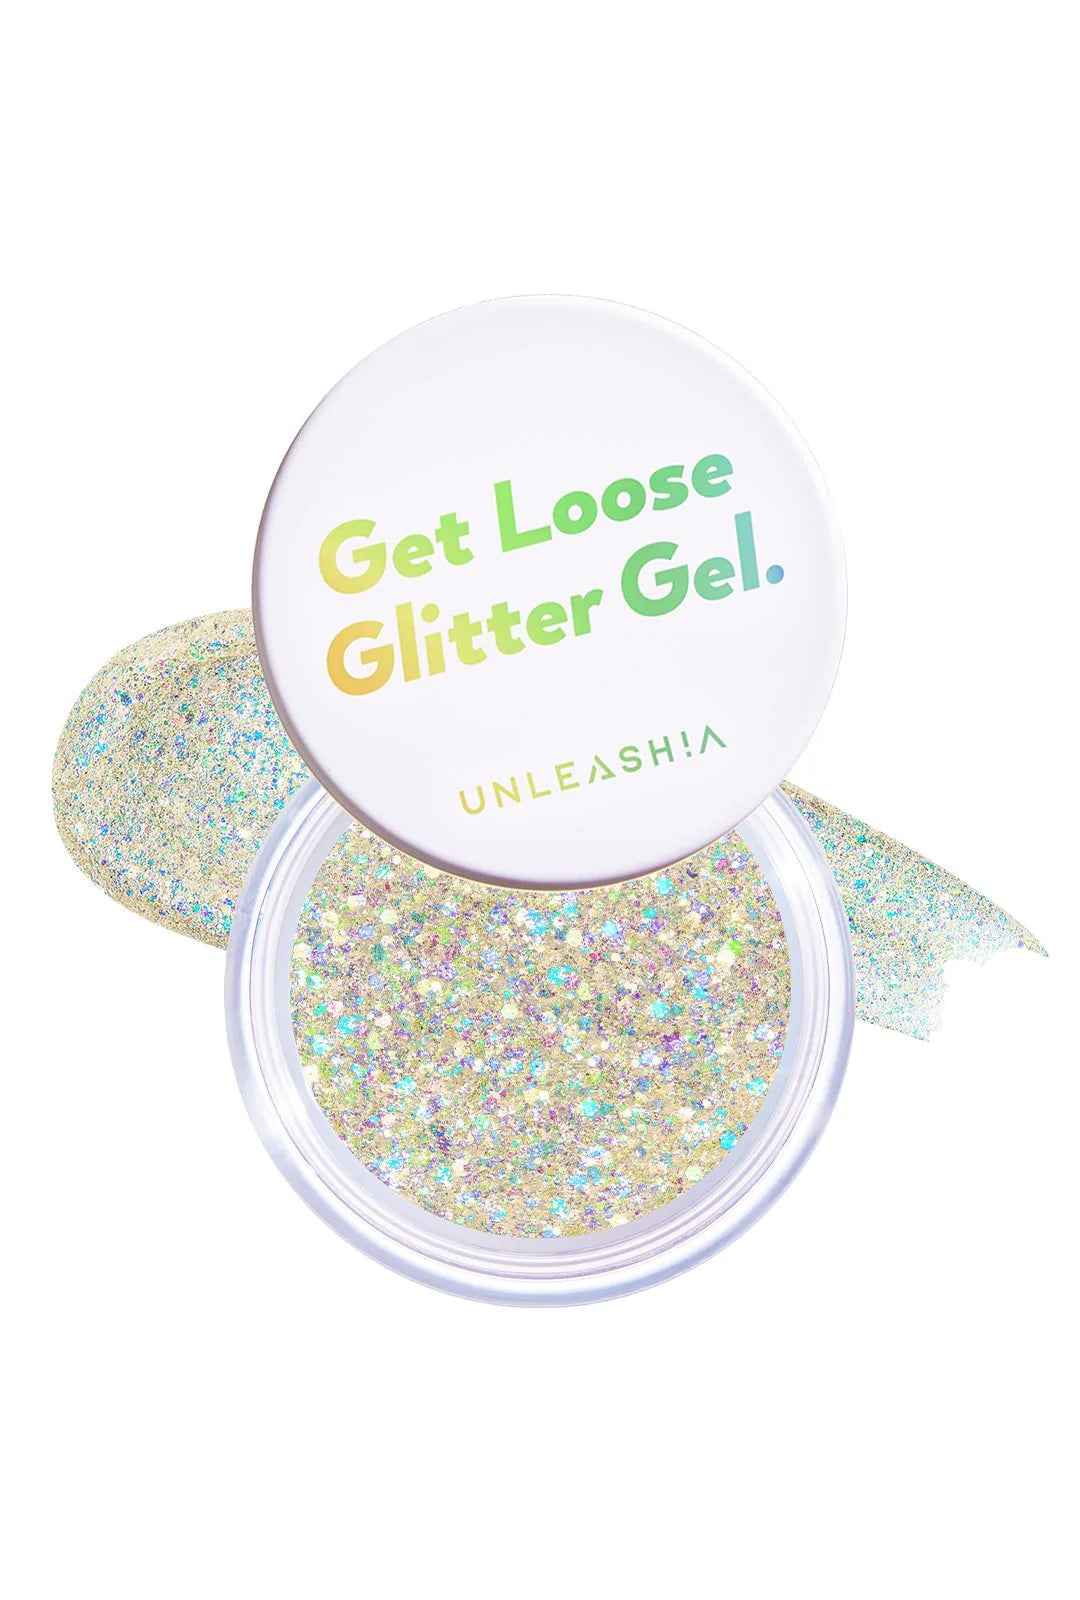 UNLEASHIA - Get Loose Glitter Gel - Korea Cosmetics BN